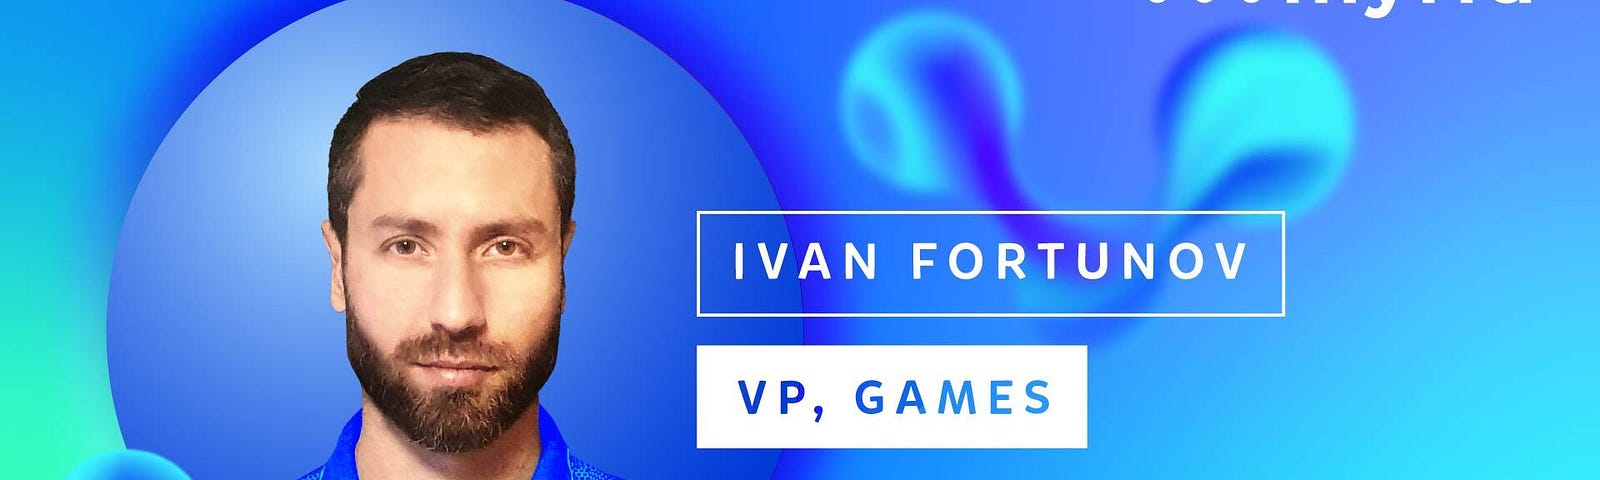 Meet our VP, Games — Ivan Fortunov!, by Myria